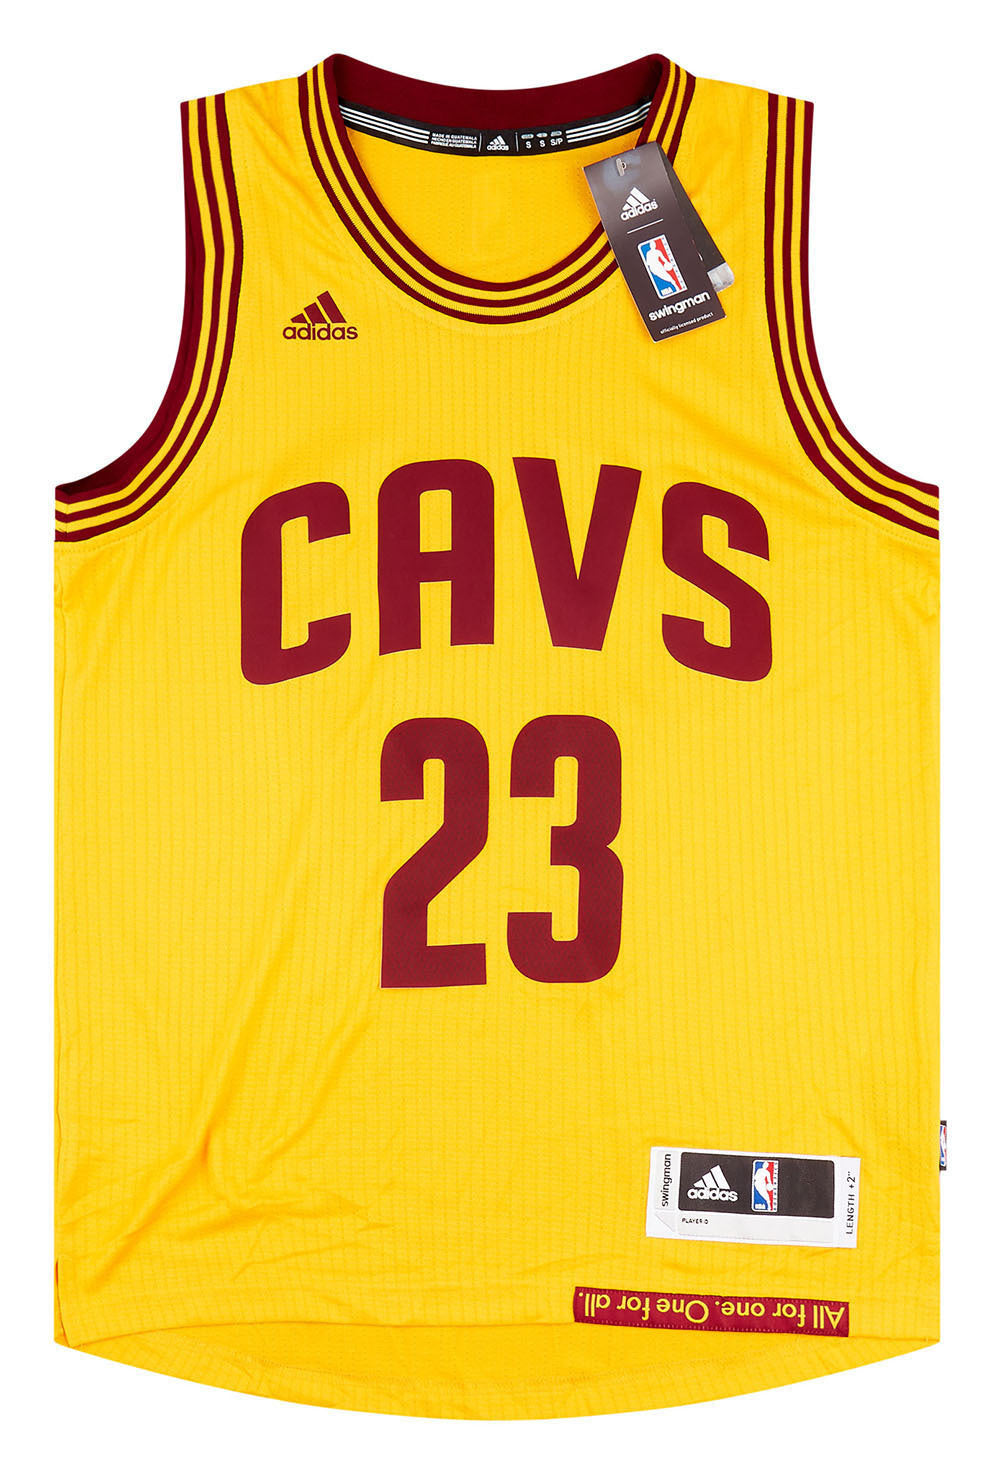 Adidas 2016 NBA Champions Cleveland Cavaliers LeBron James Basketball Jersey